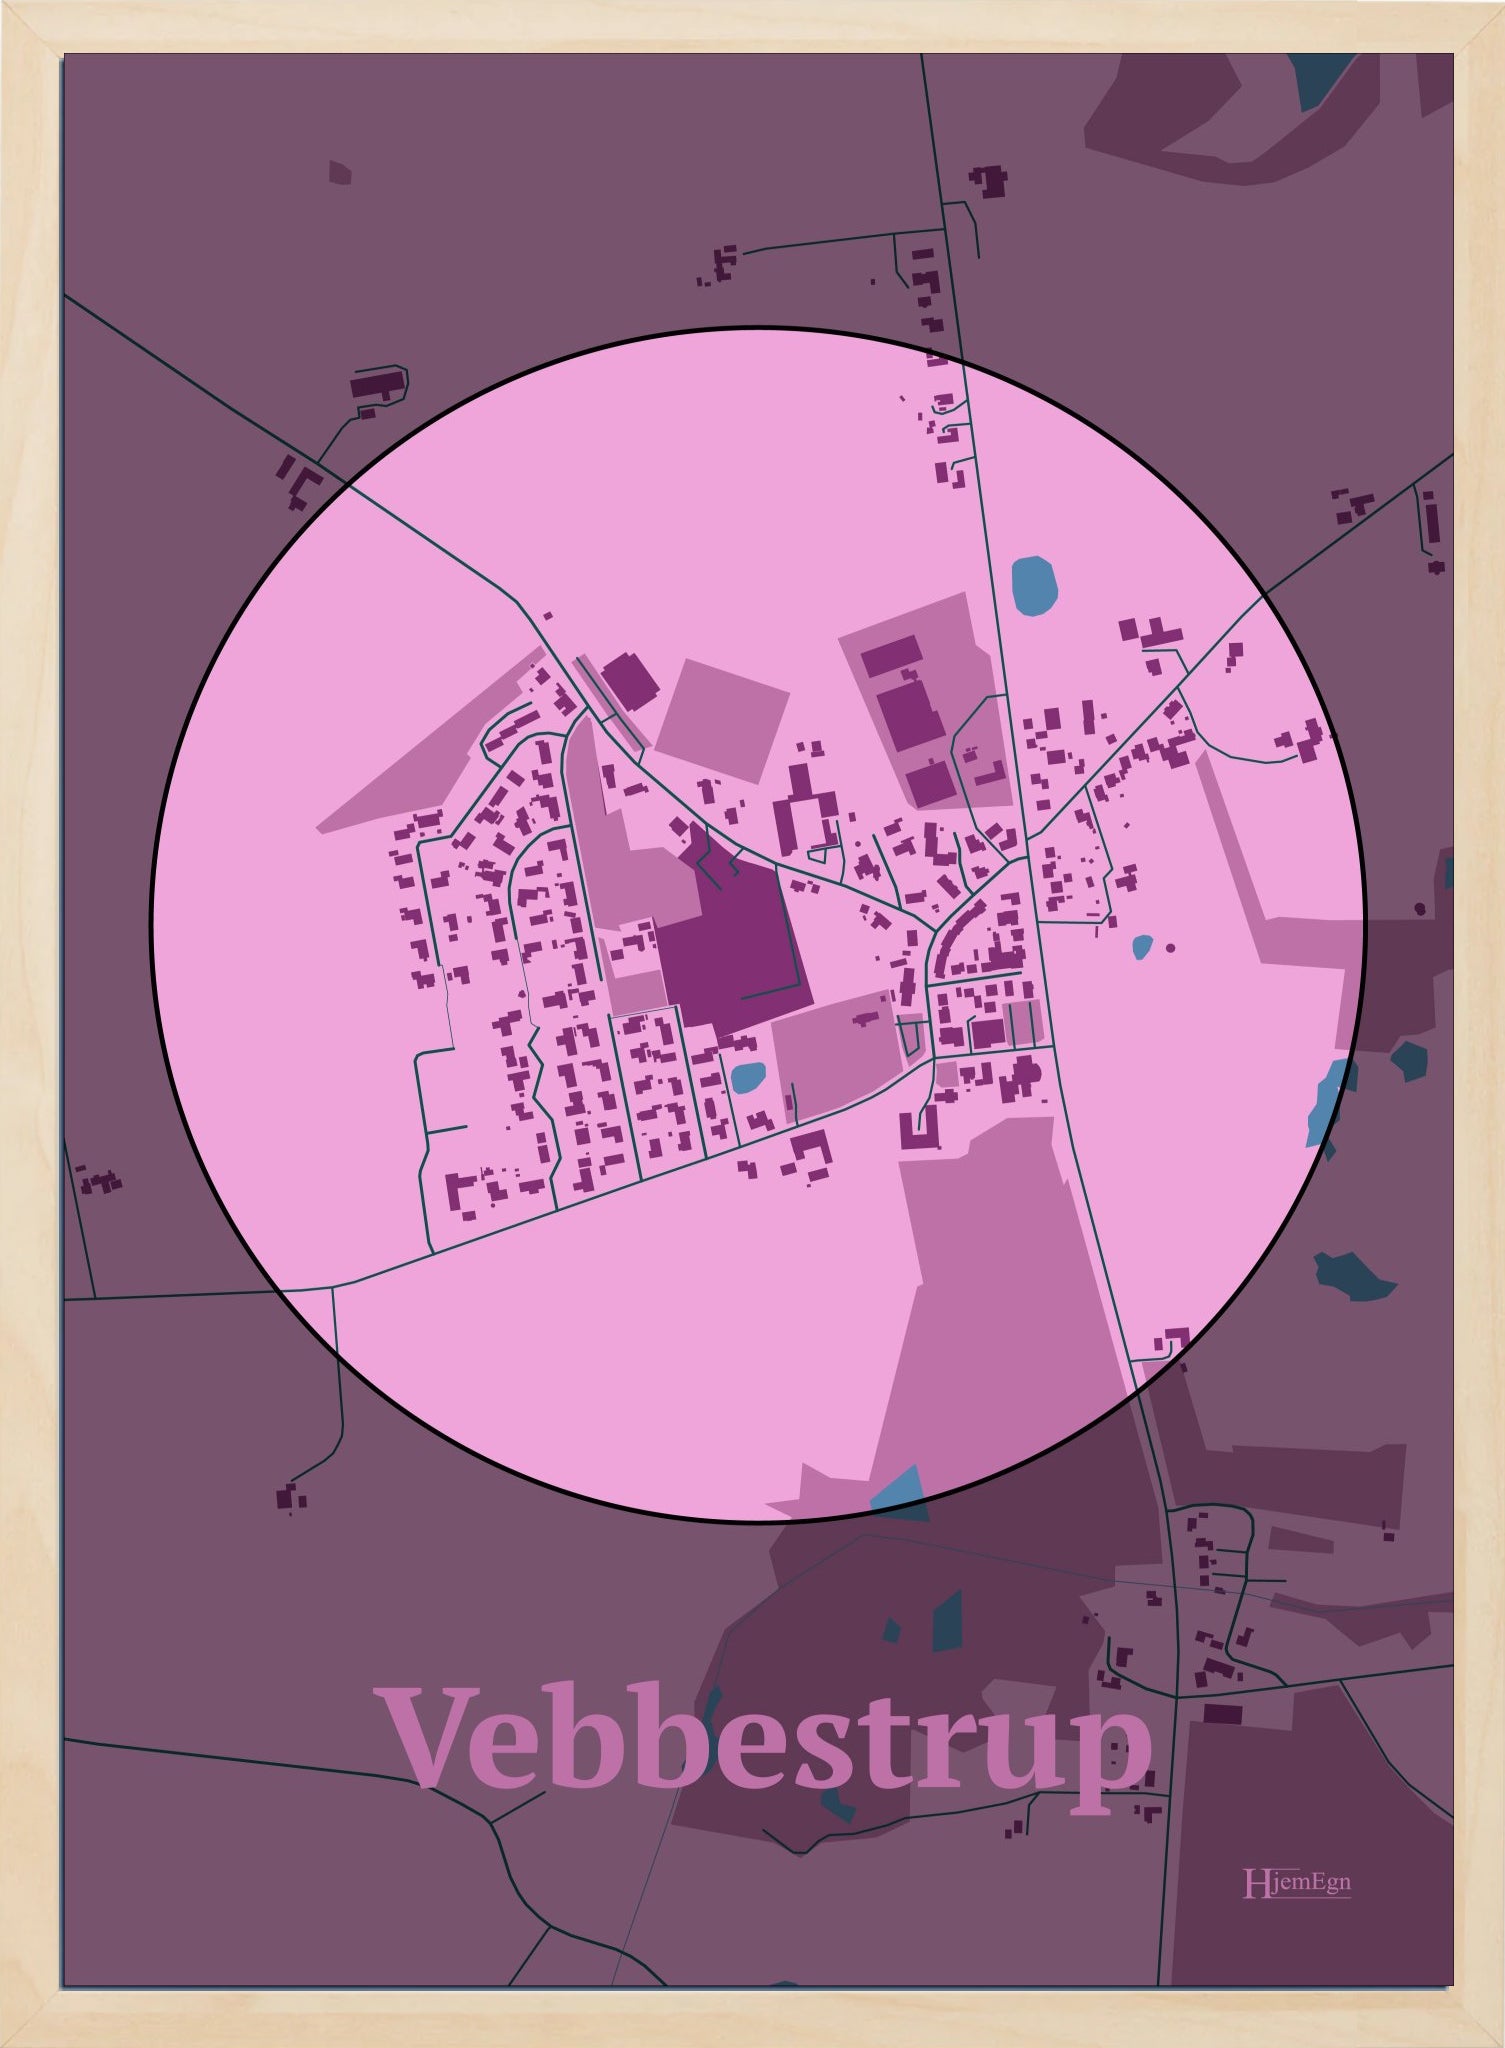 Vebbestrup plakat i farve pastel rød og HjemEgn.dk design centrum. Design bykort for Vebbestrup